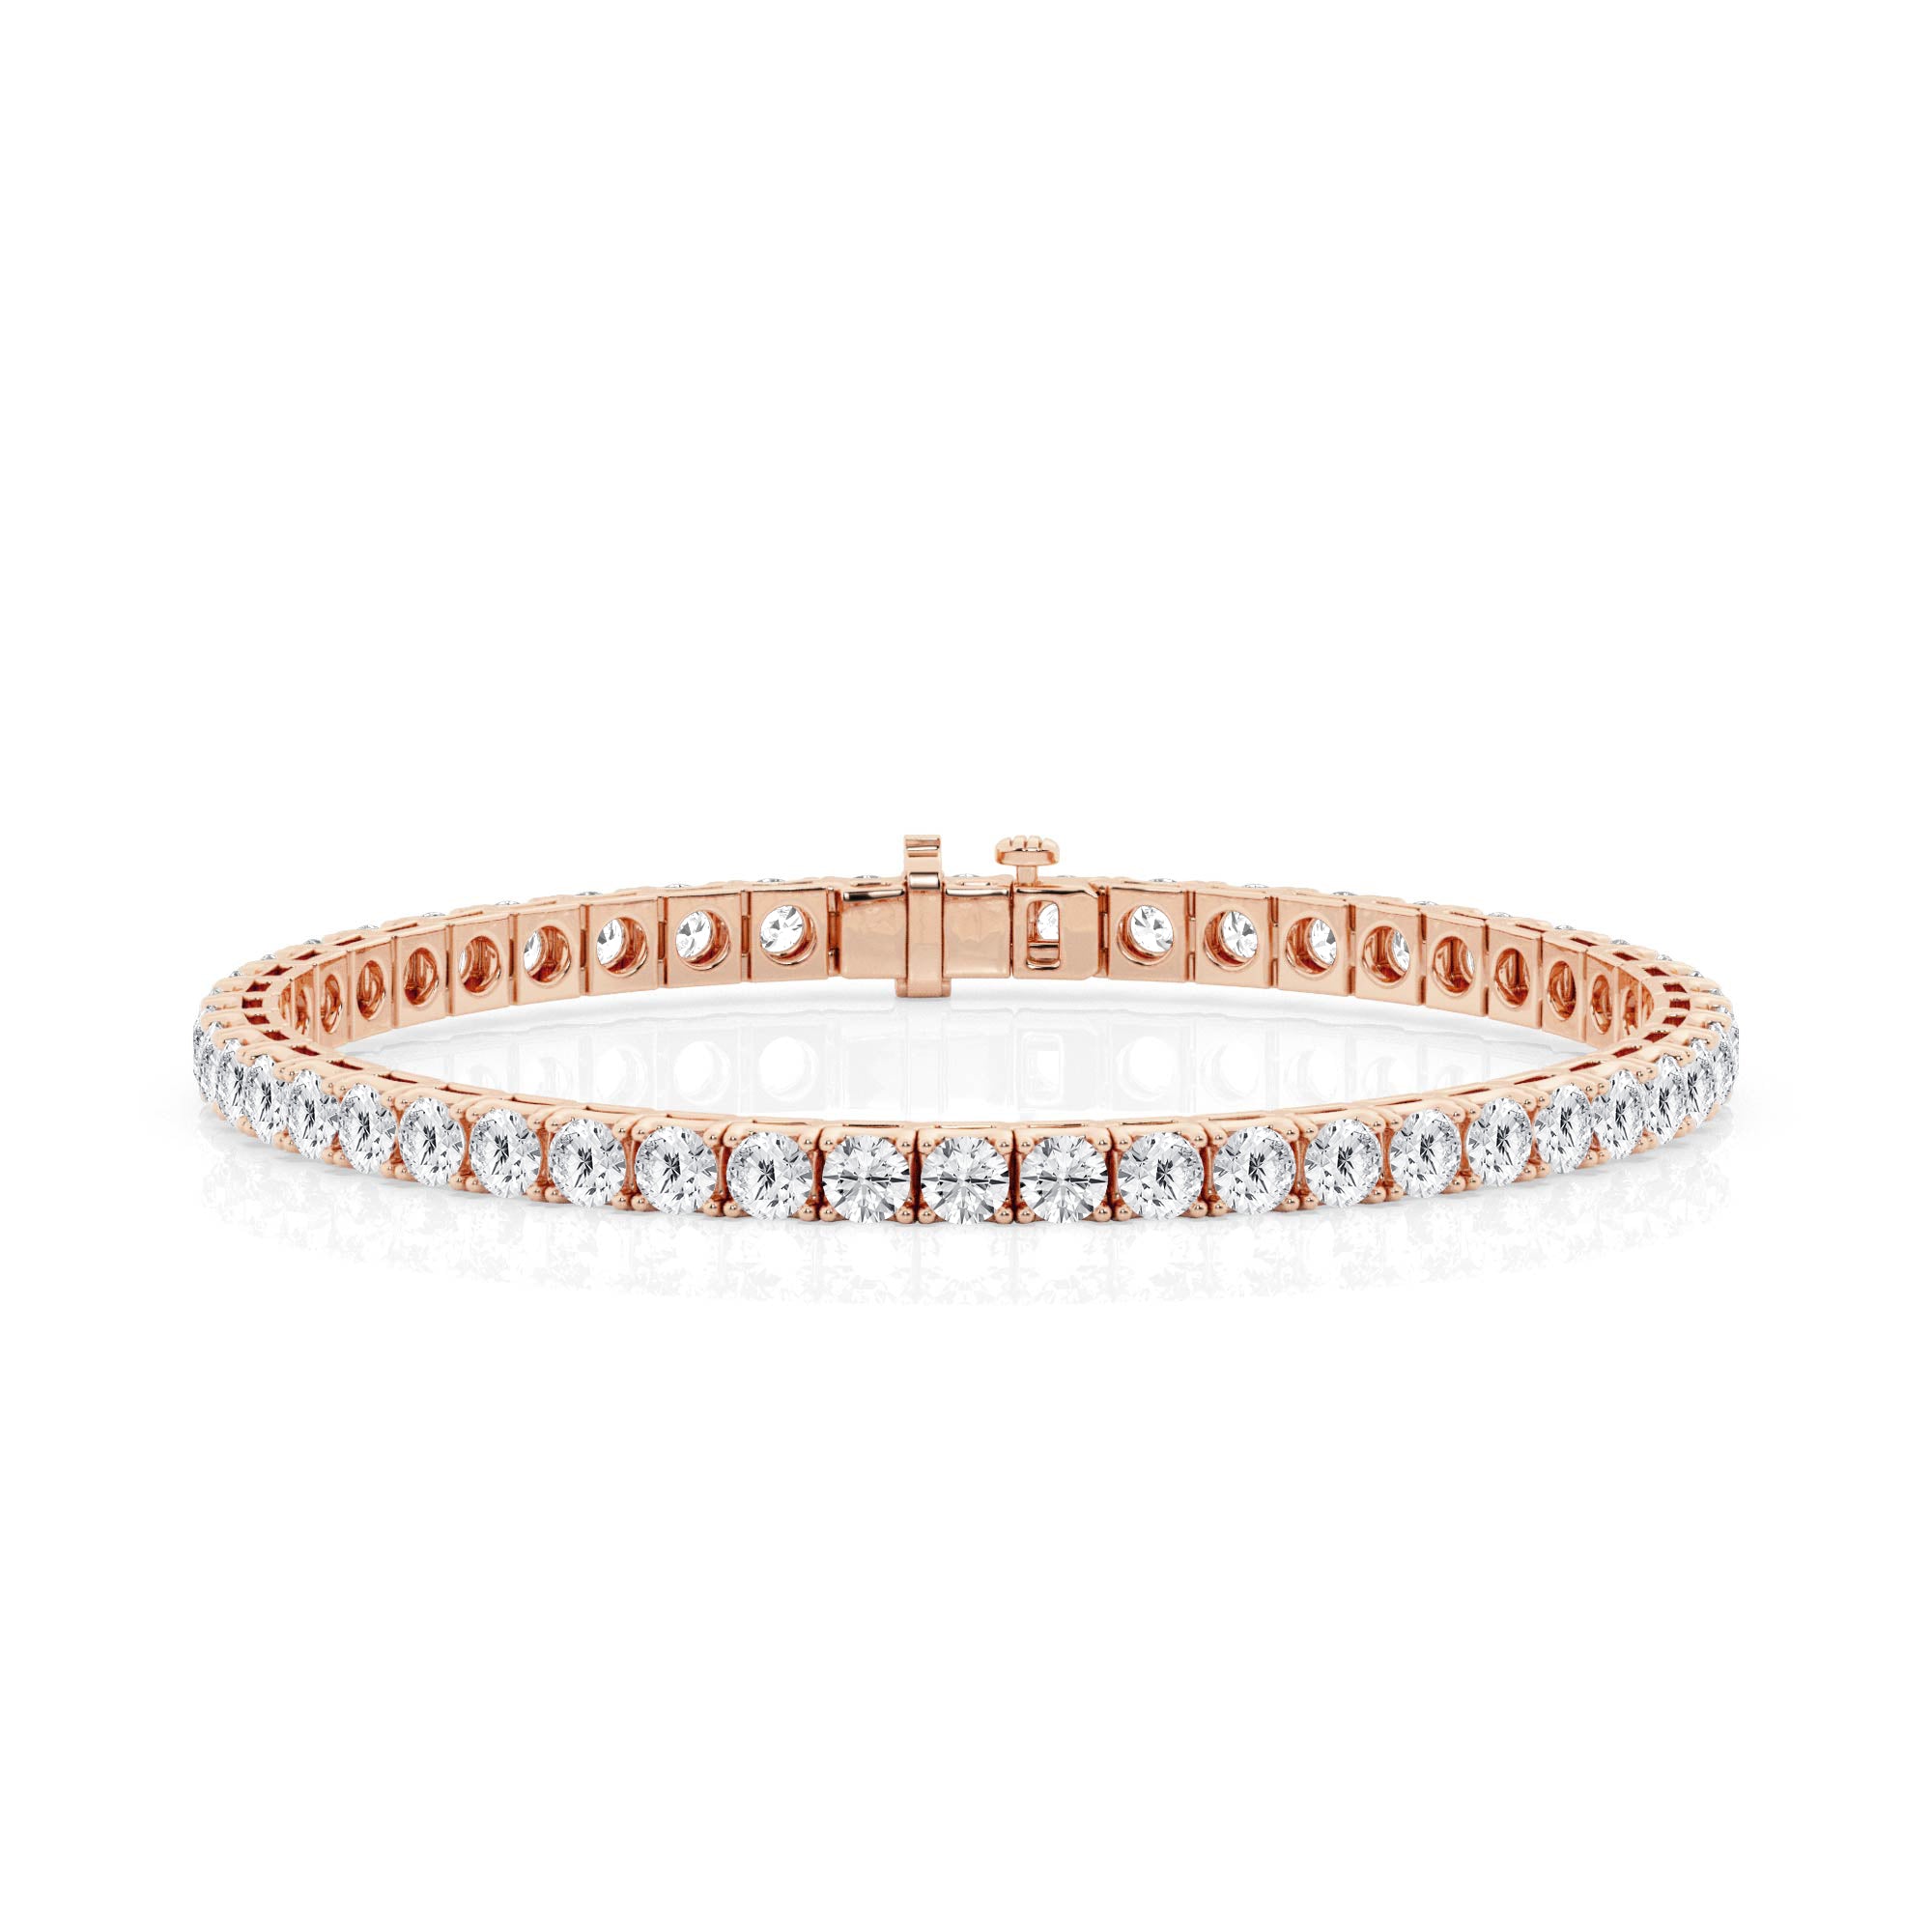 12 carat Tennis Bracelet